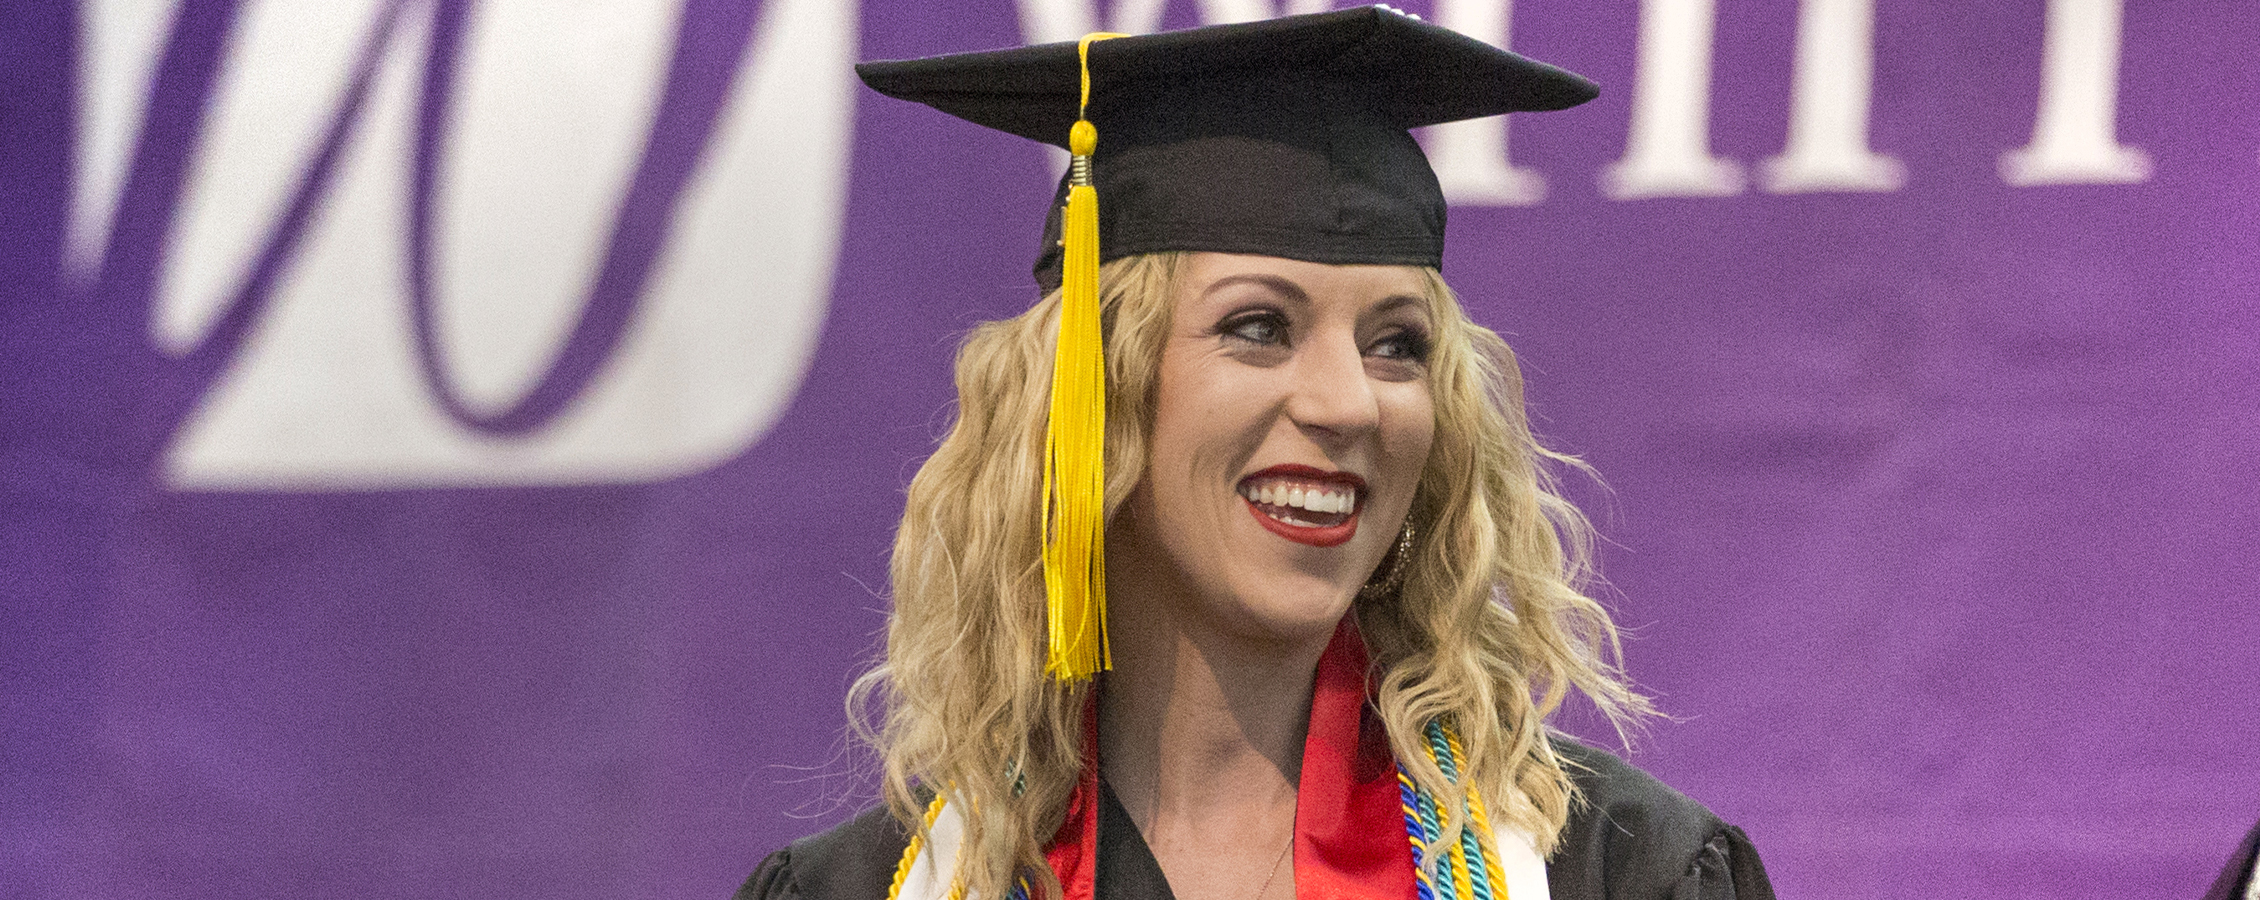 An international student smiles at graduation.